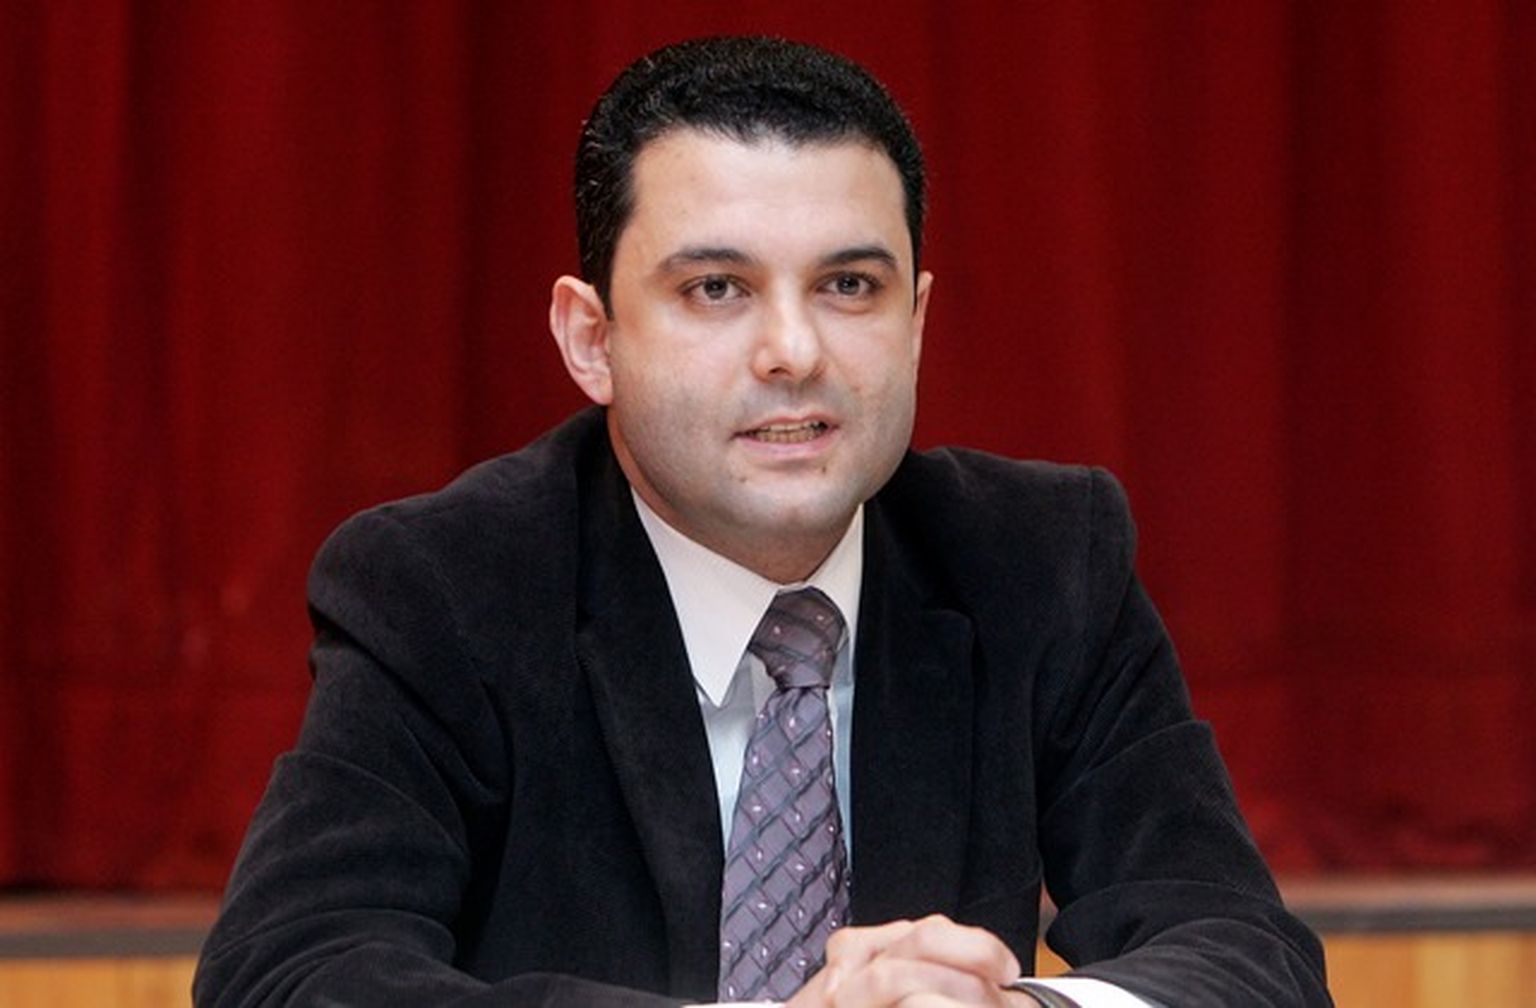 Hosams Abu Meri